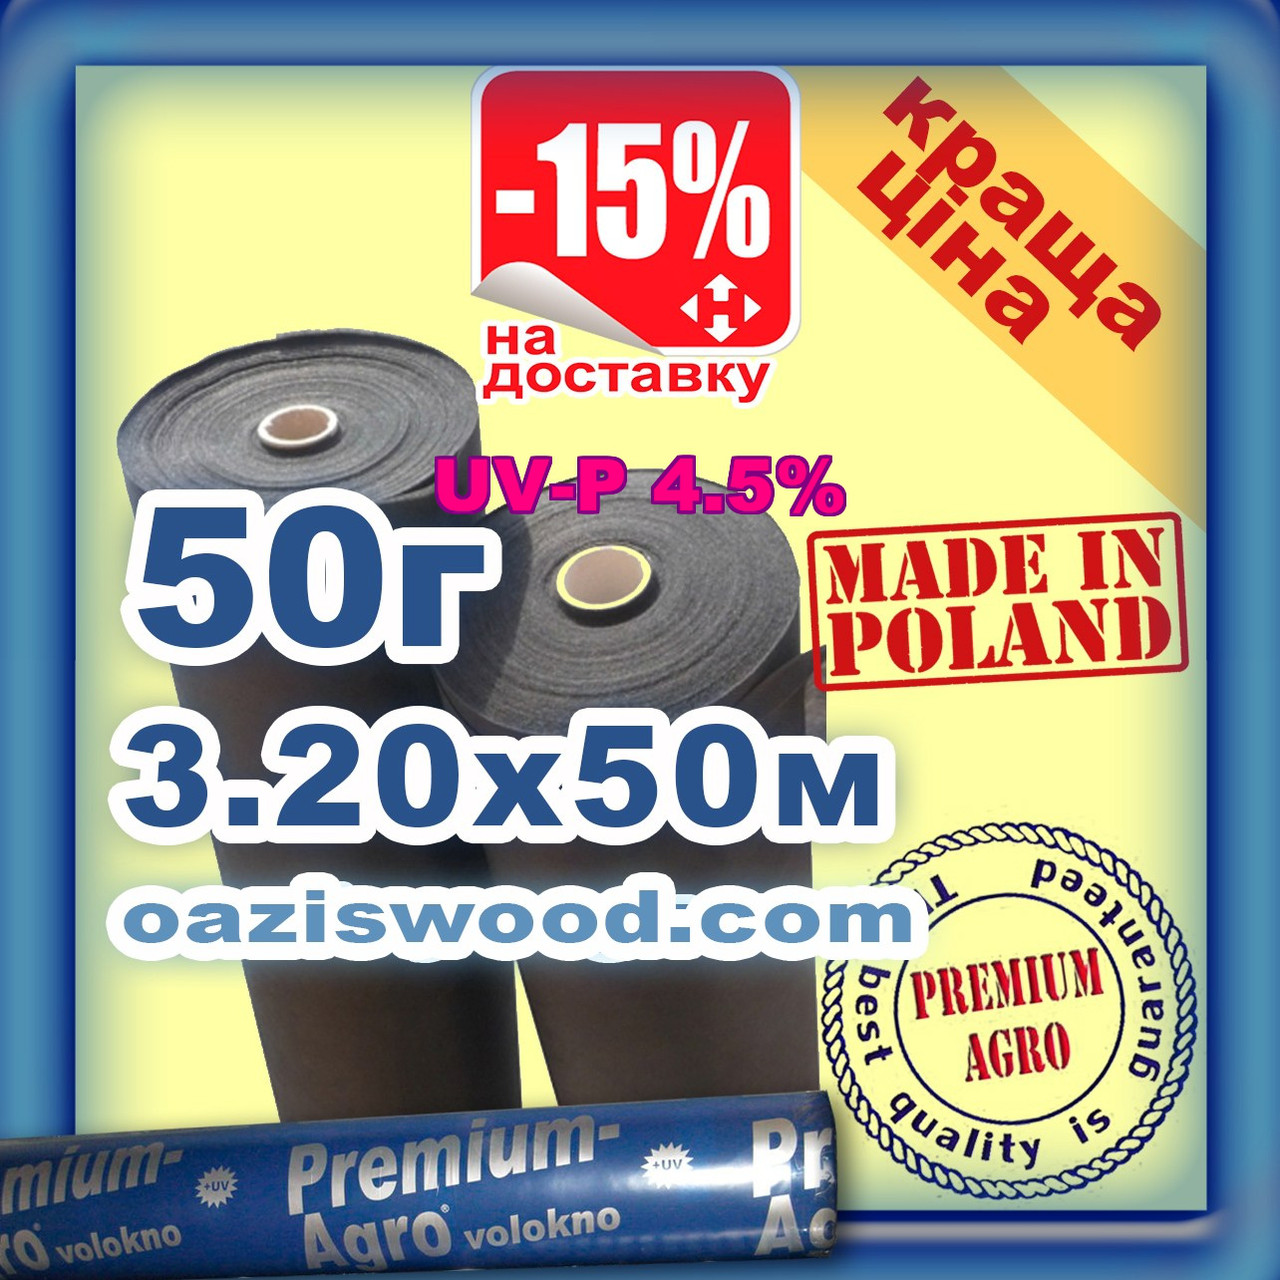 Агроволокно p-50g 3.2*50м чорне UV-P 4.5% Premium-Agro Польща